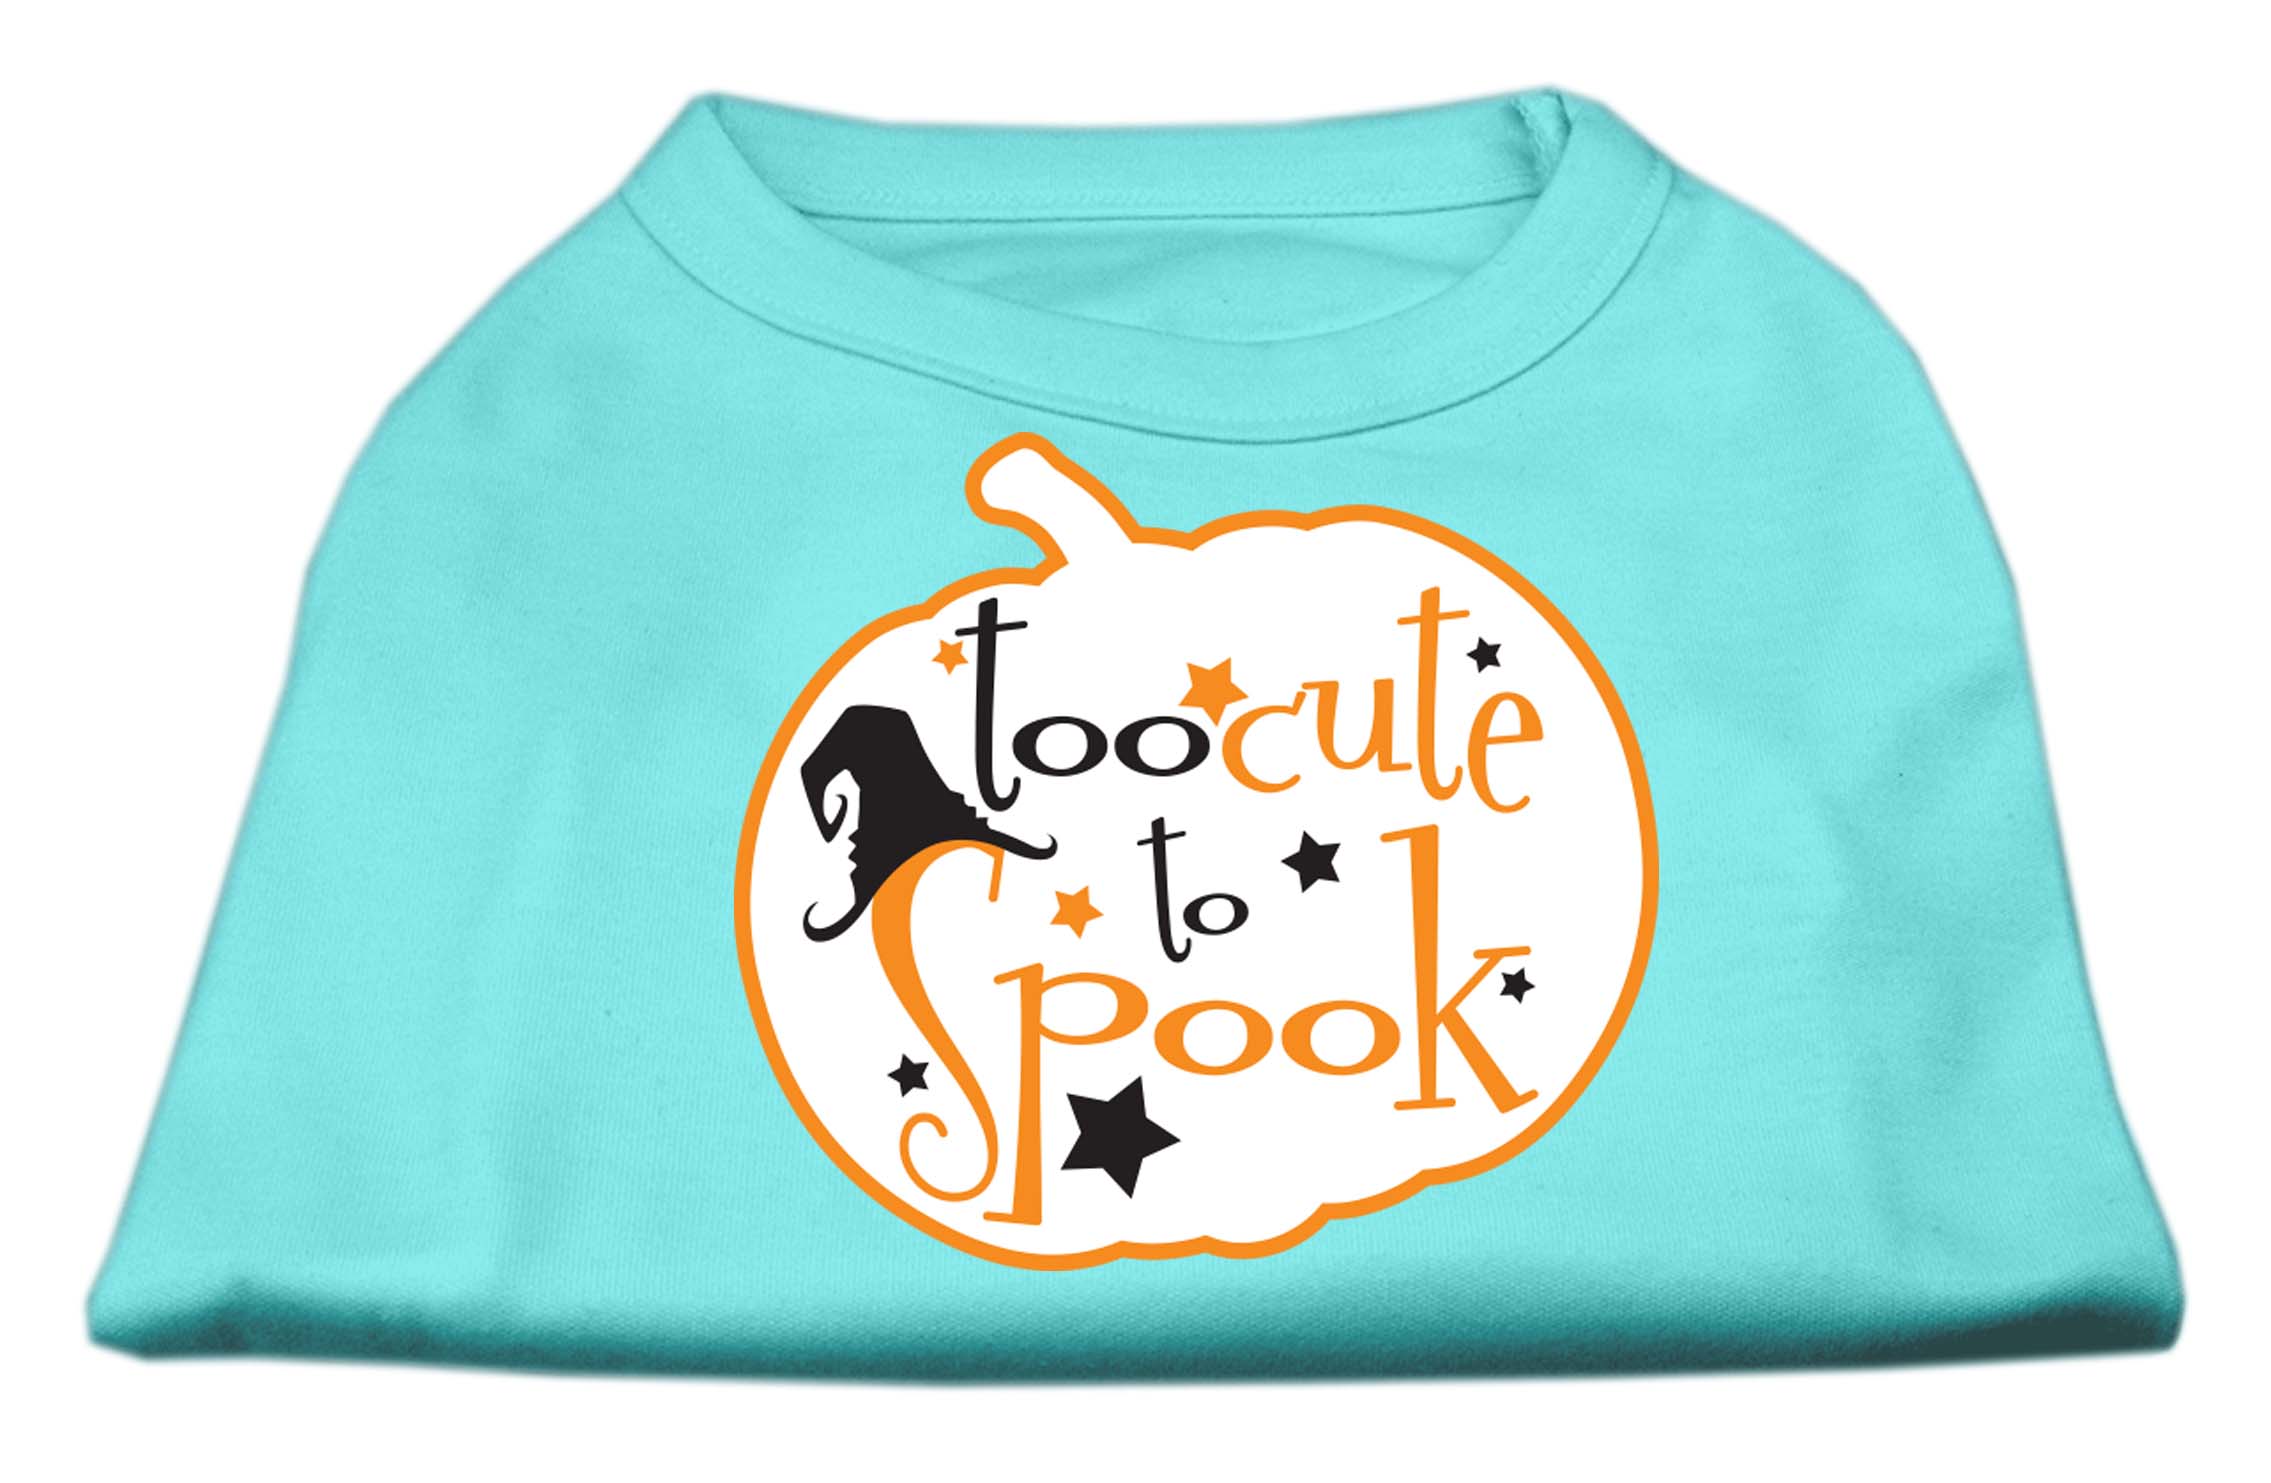 Too Cute to Spook Screen Print Dog Shirt Aqua XL